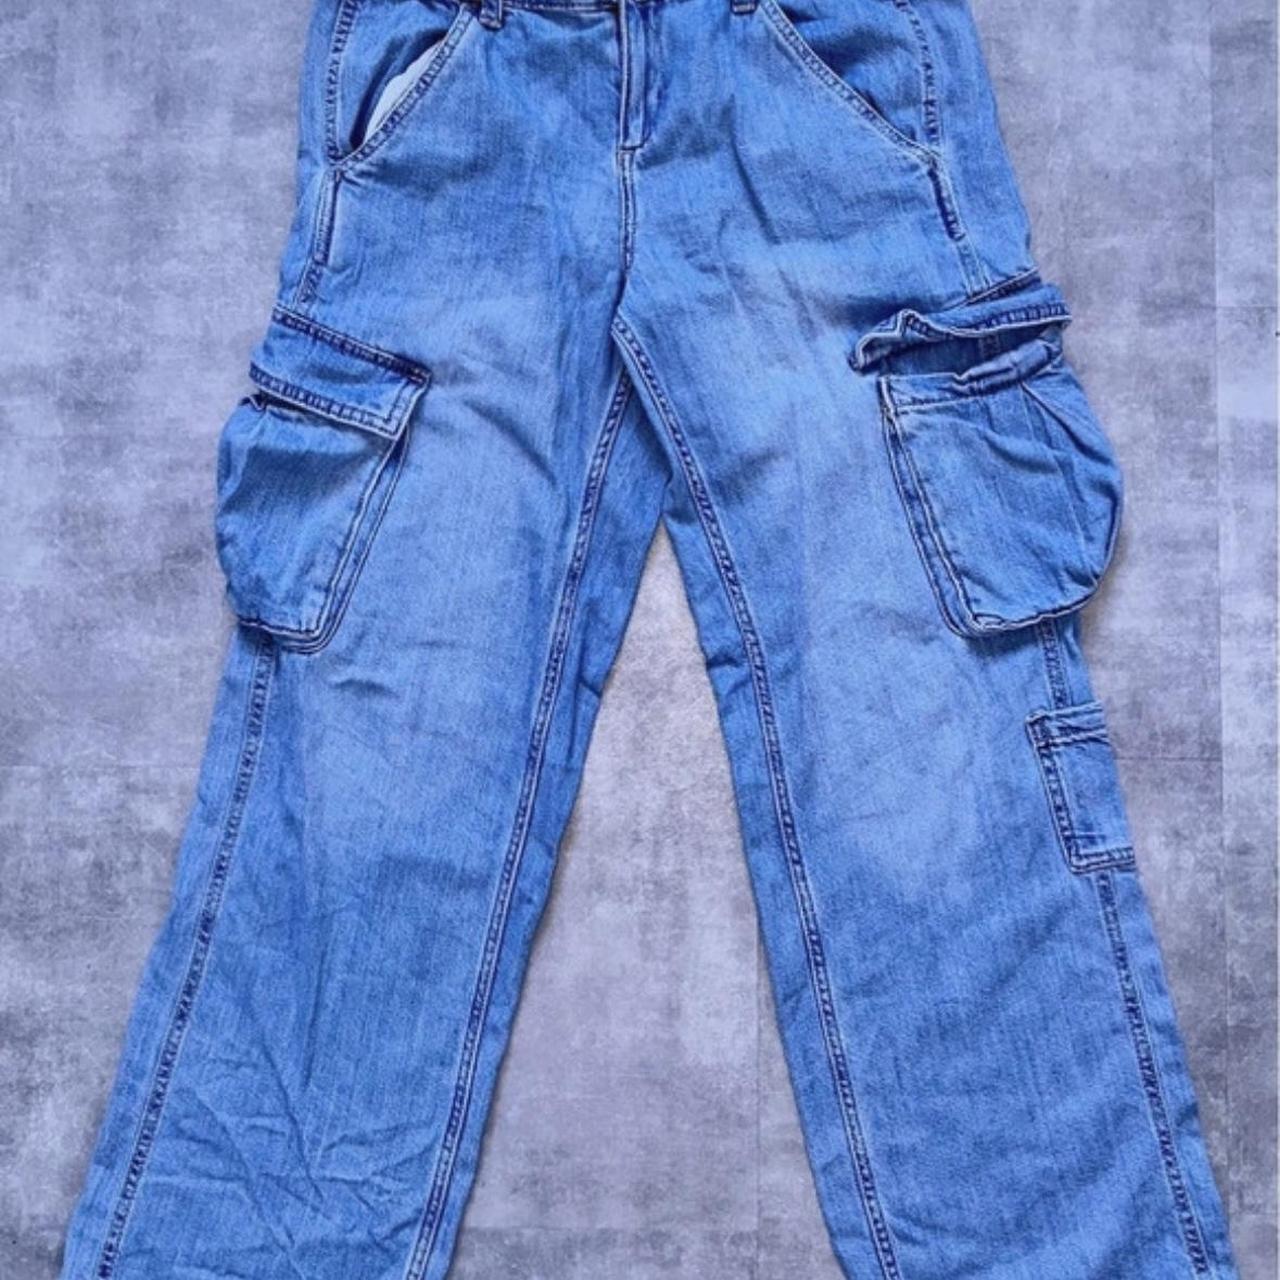 H&M jean cargos Oversized - Denim style Size 10 - Depop